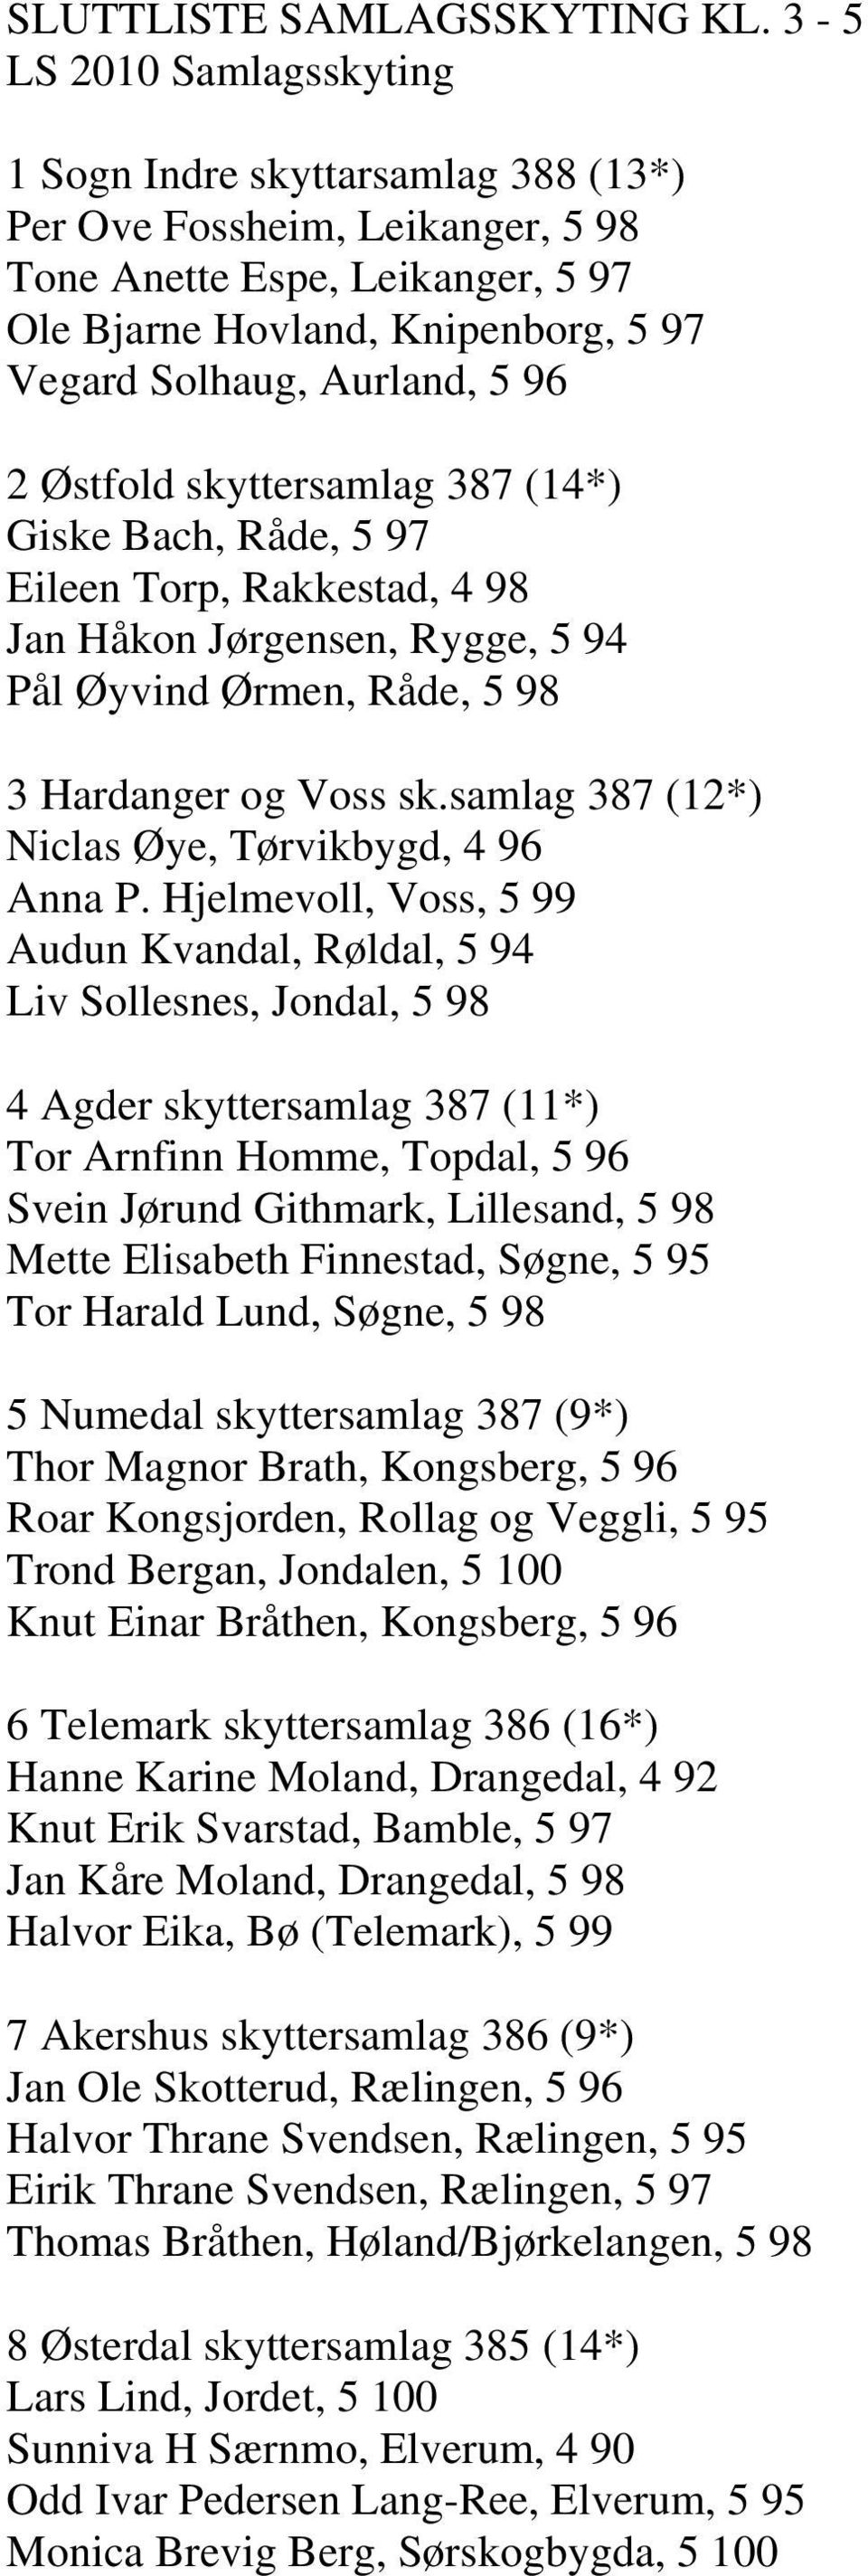 2 Østfold skyttersamlag 387 (14*) Giske Bach, Råde, 5 97 Eileen Torp, Rakkestad, 4 98 Jan Håkon Jørgensen, Rygge, 5 94 Pål Øyvind Ørmen, Råde, 5 98 3 Hardanger og Voss sk.